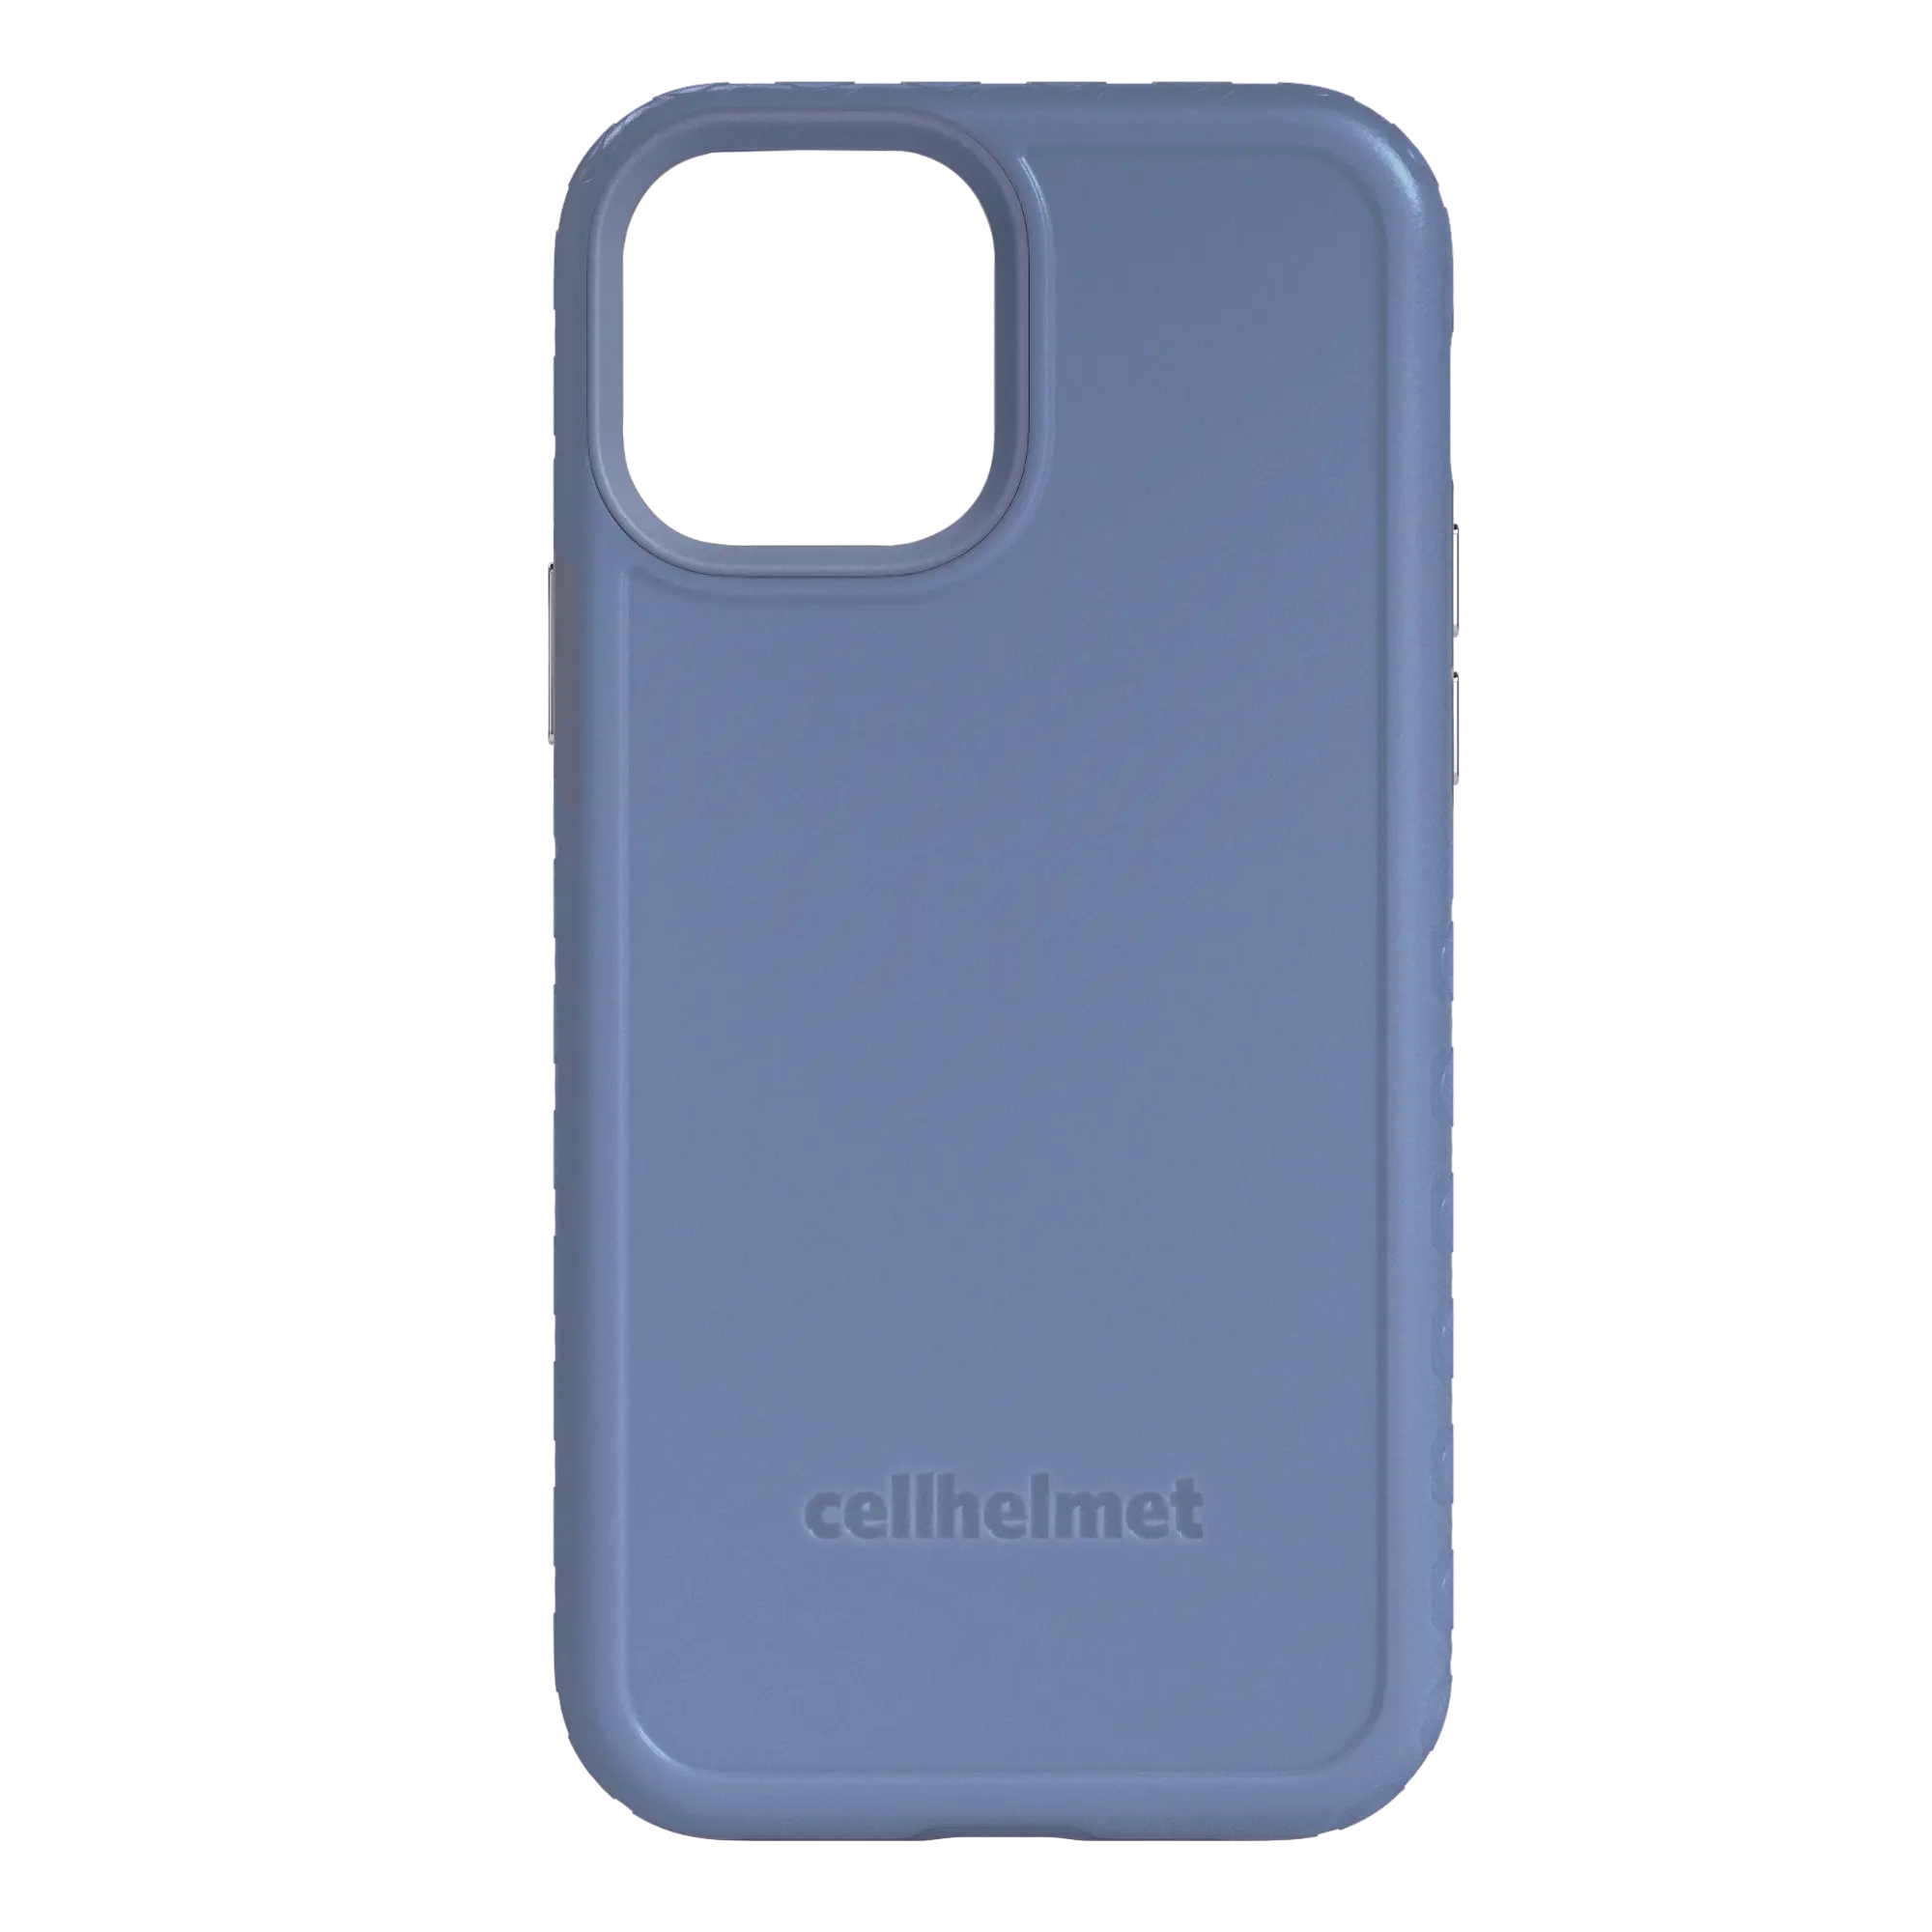 Blue cellhelmet Customizable Case for iPhone 12 Pro